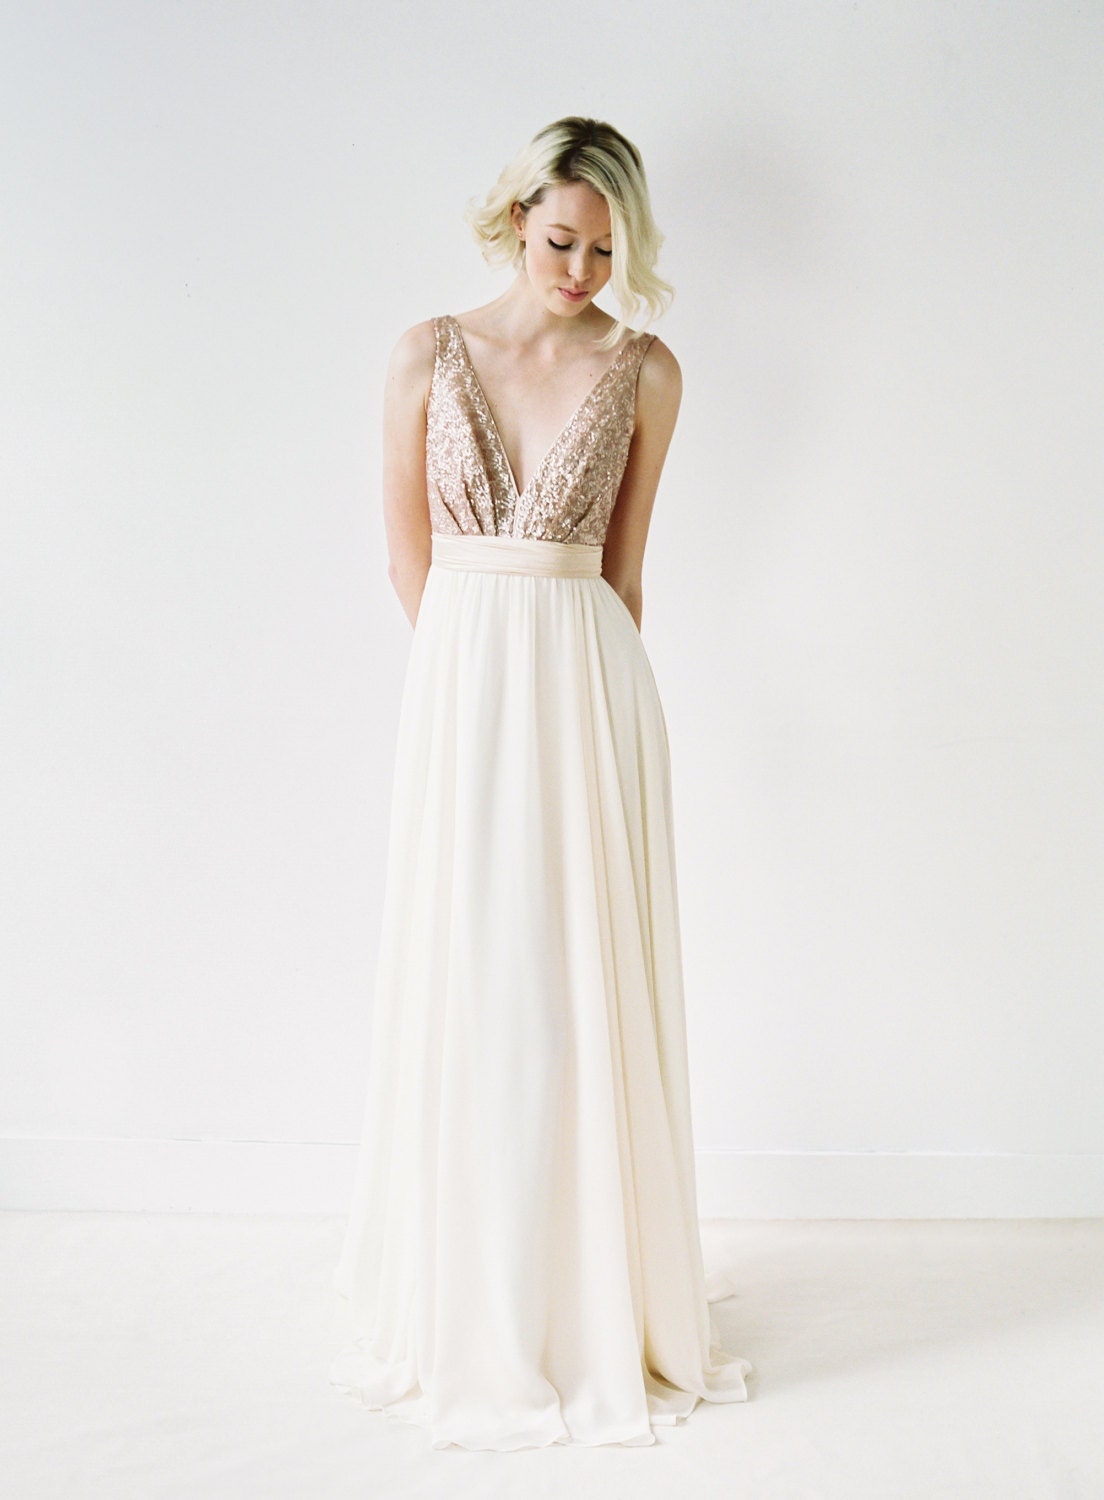 Eden // A rose gold sequined backless wedding dress